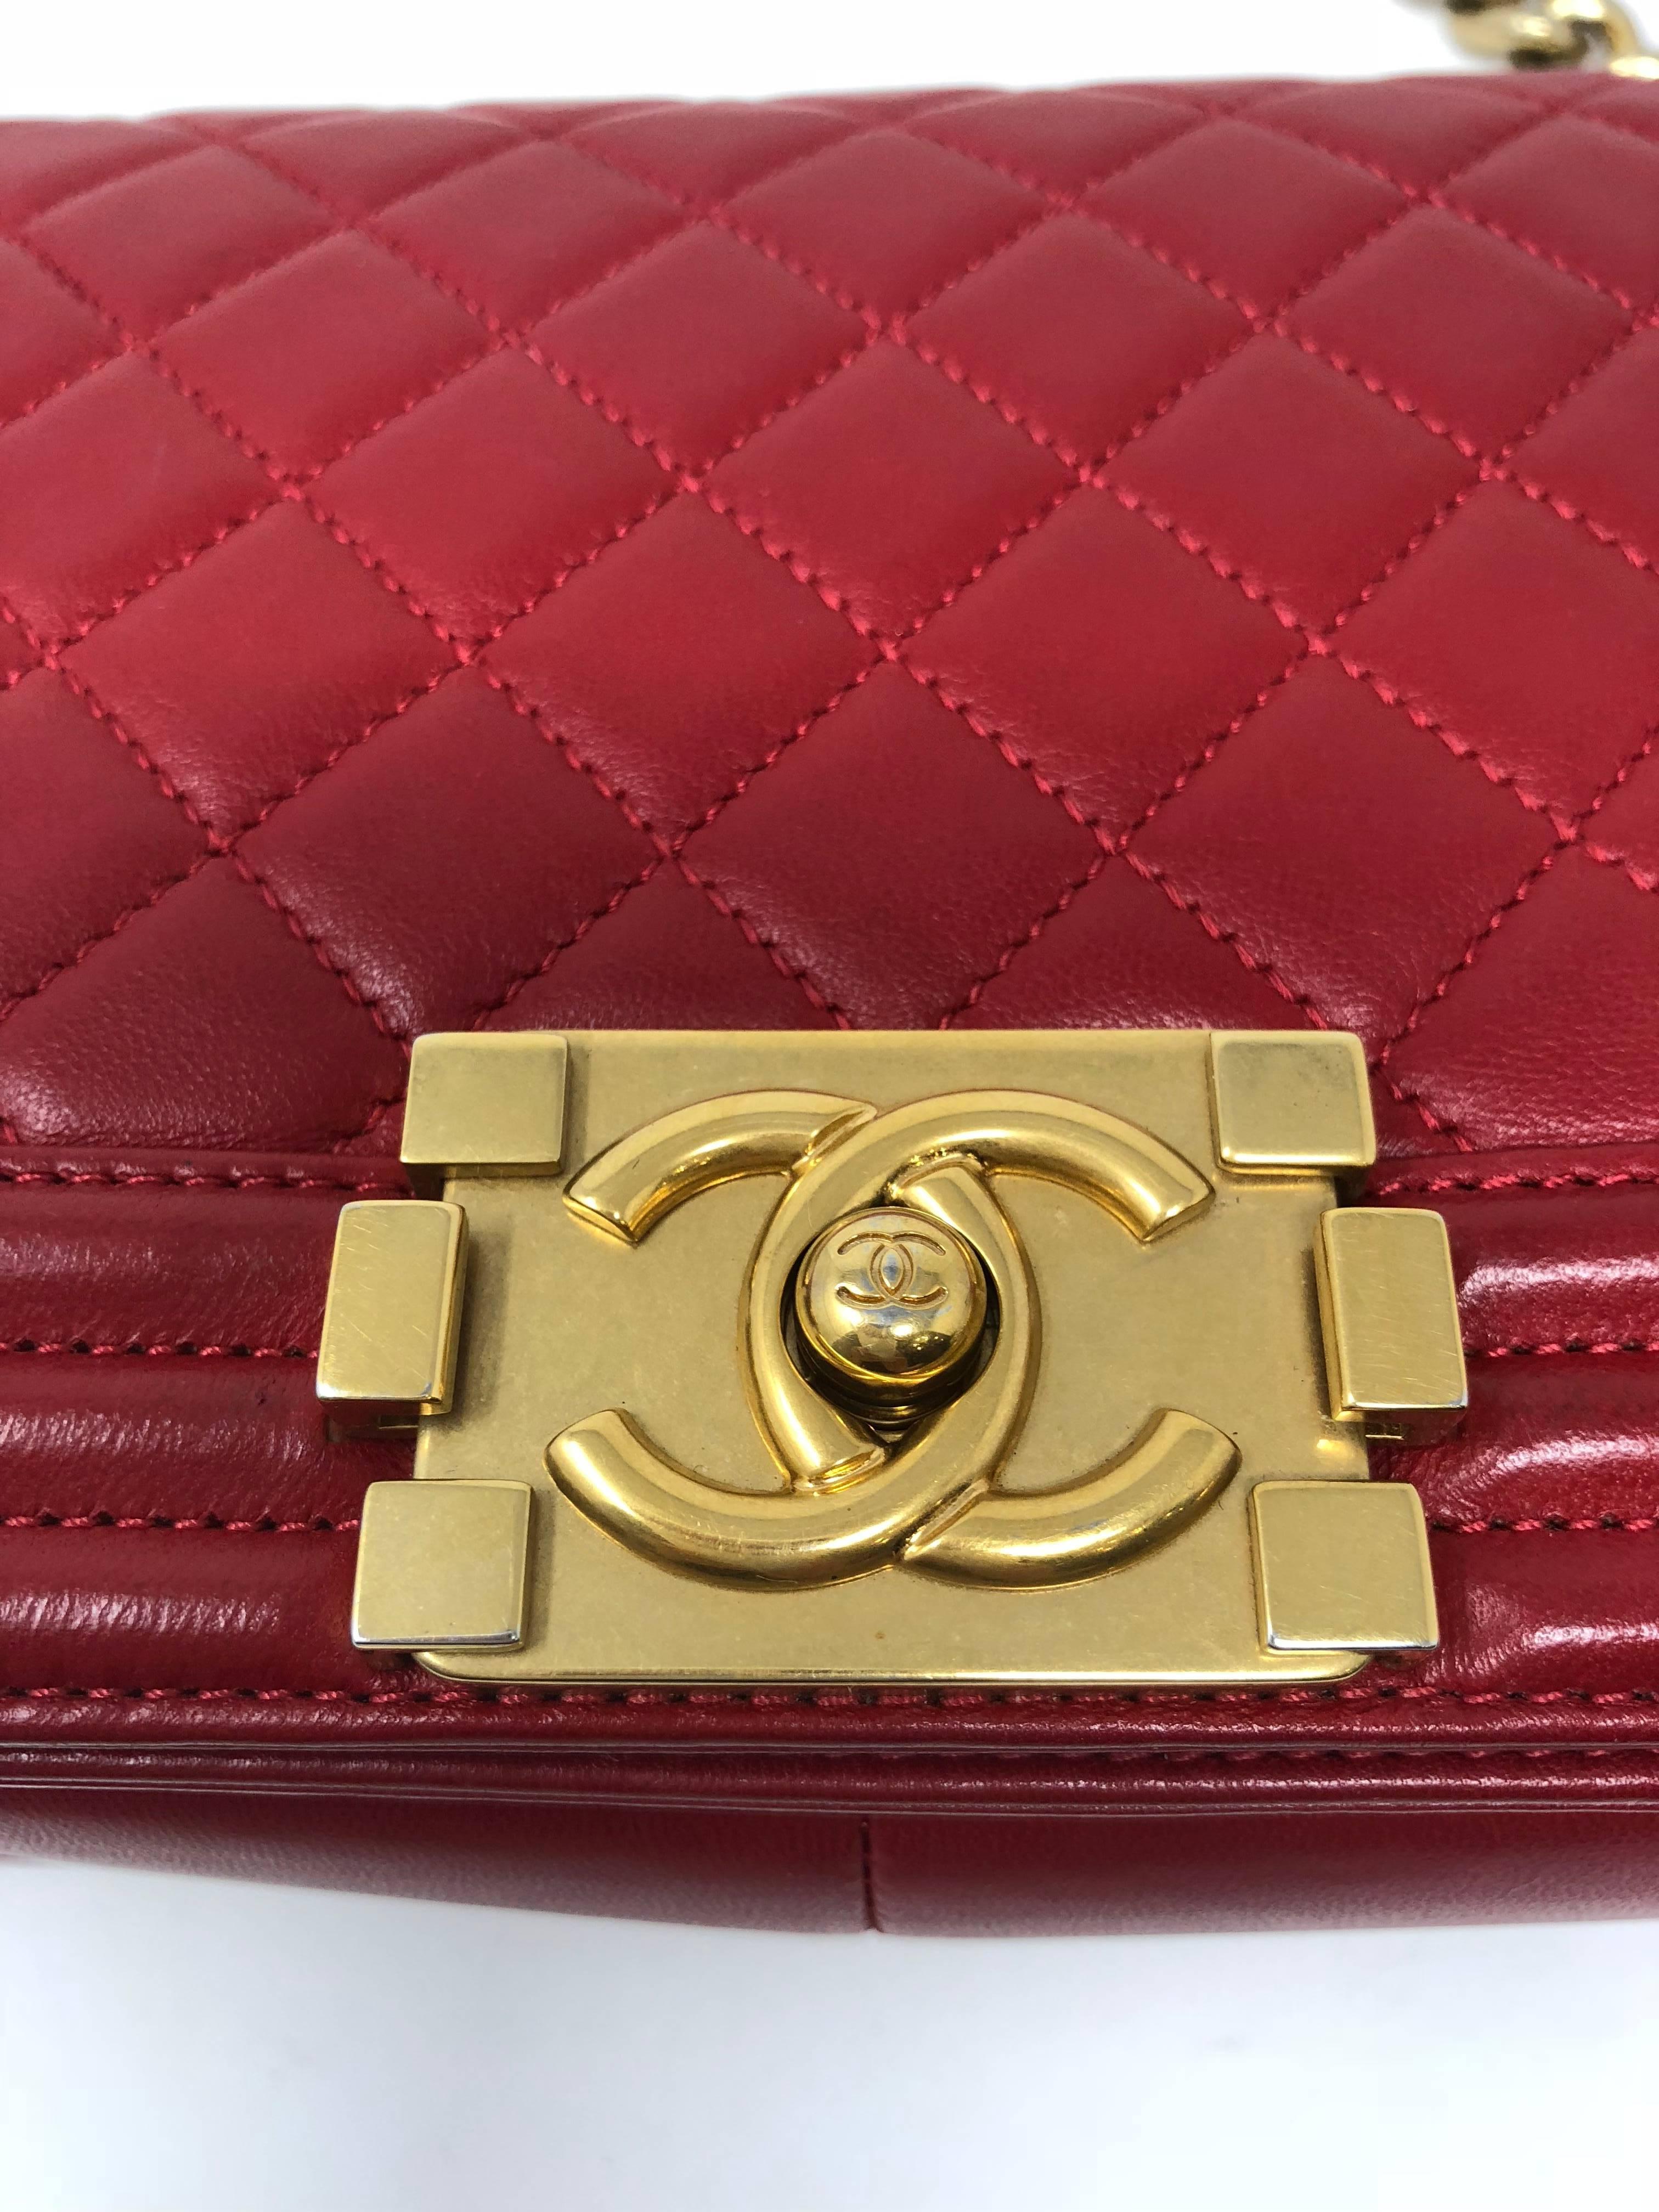 Chanel Le Boy Red Bag 5